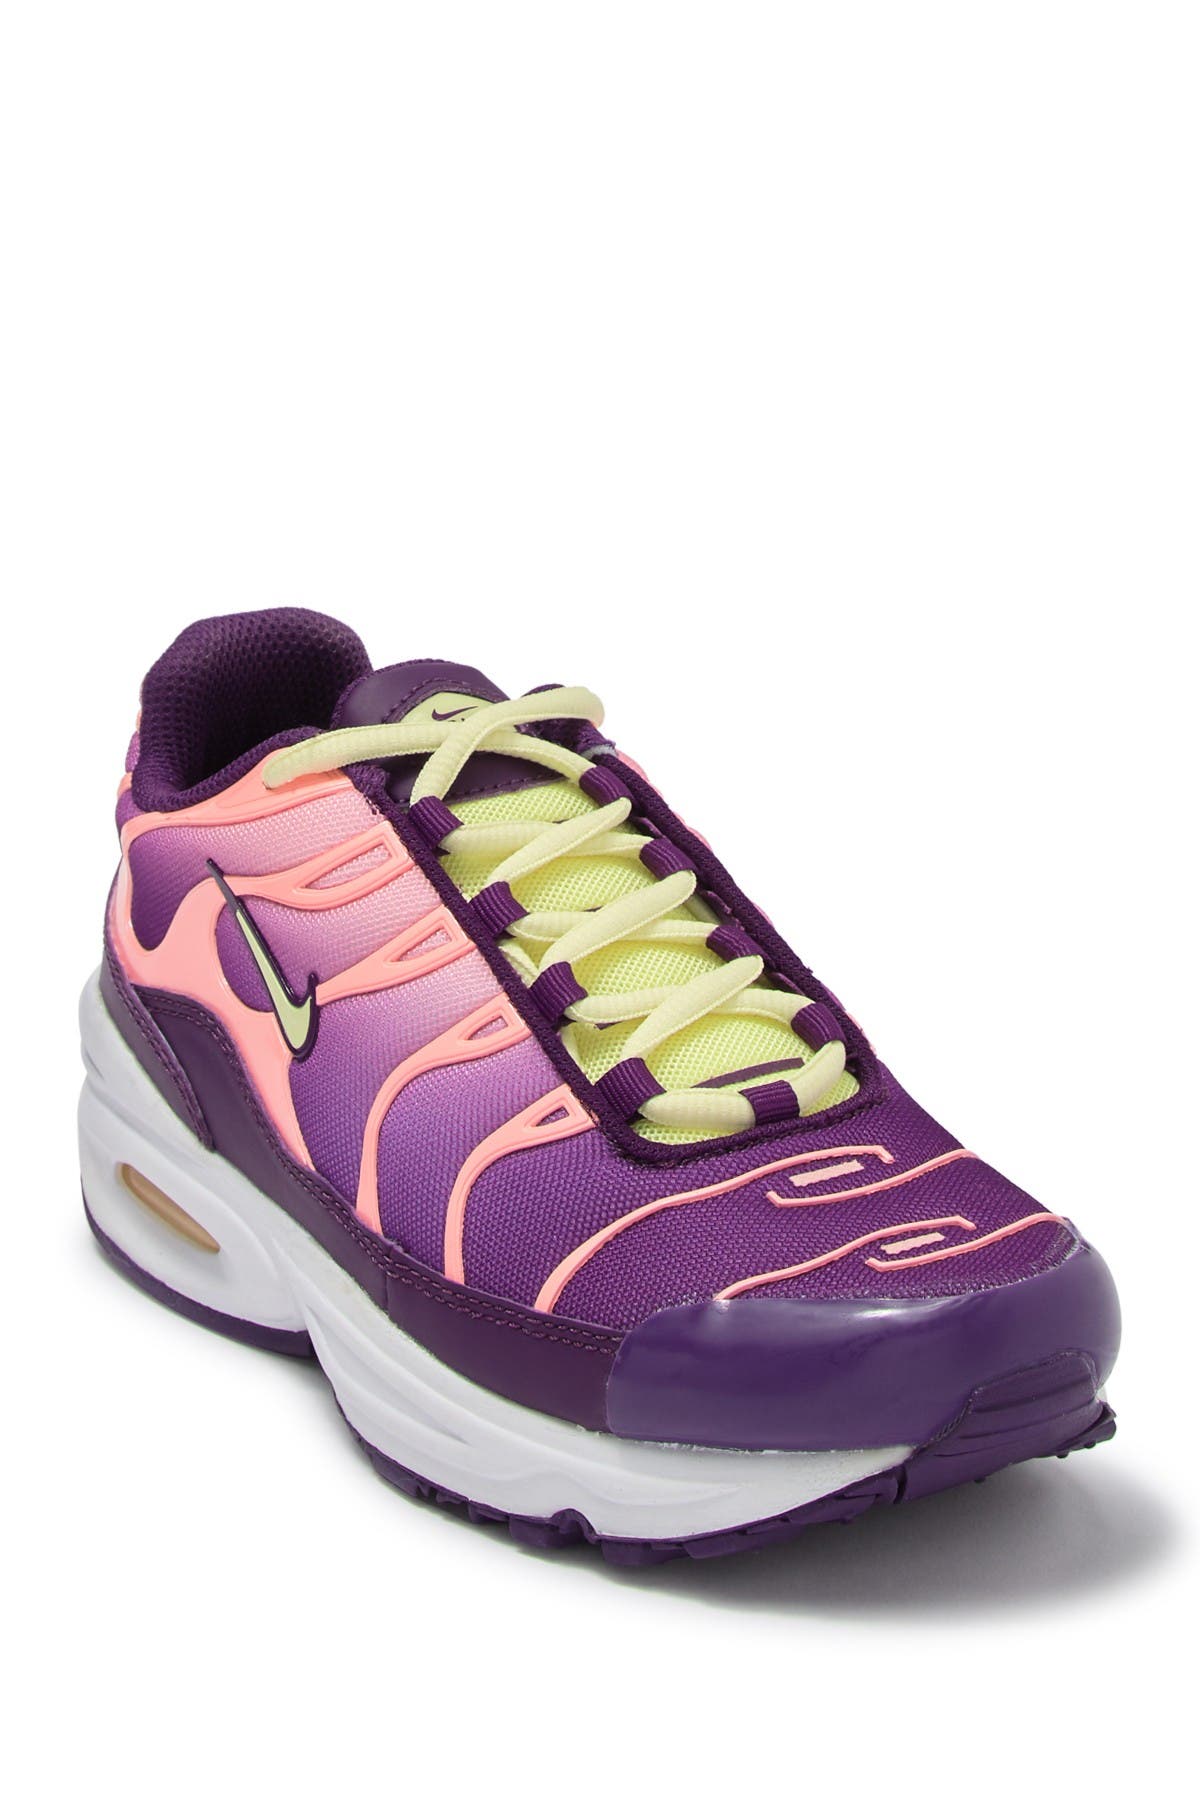 Nike | Air Max Plus Sneaker | Nordstrom 